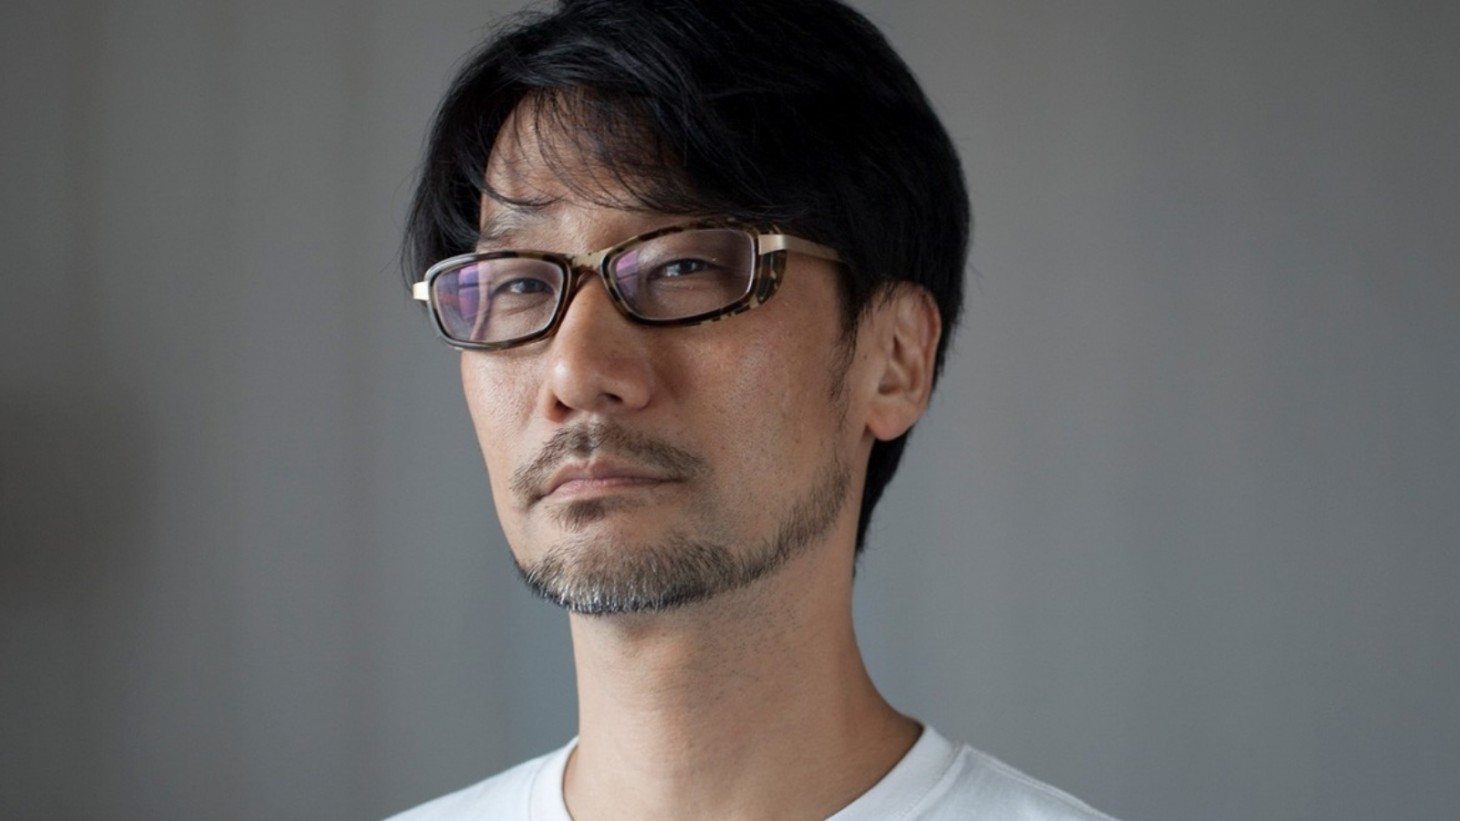 Who is Hideo Kojima?
